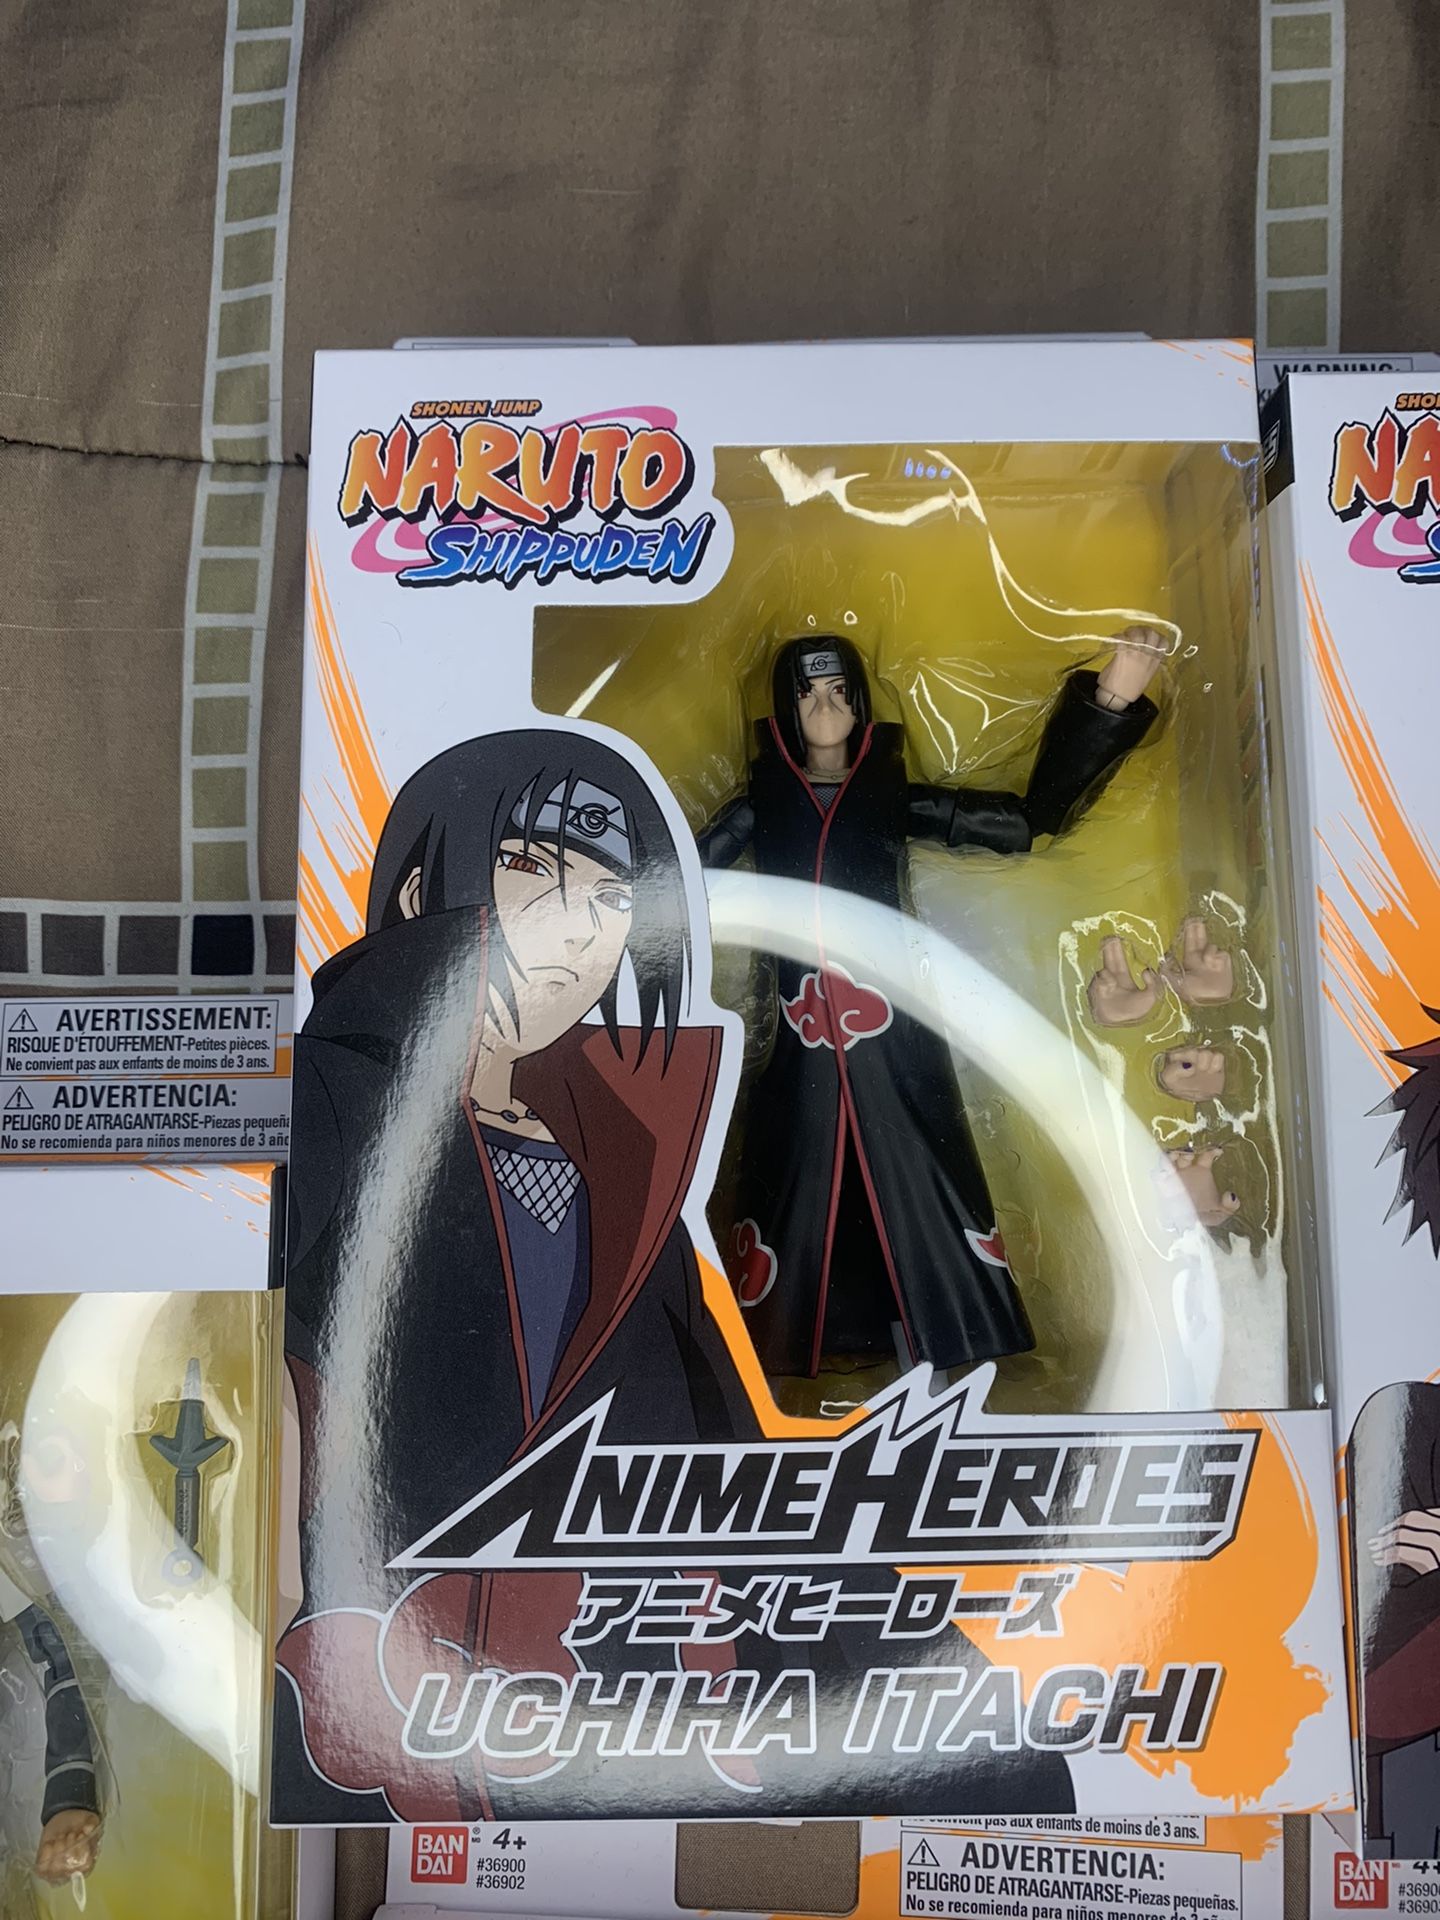 Naruto Sasuke Action Figure for Sale in Orlando, FL - OfferUp